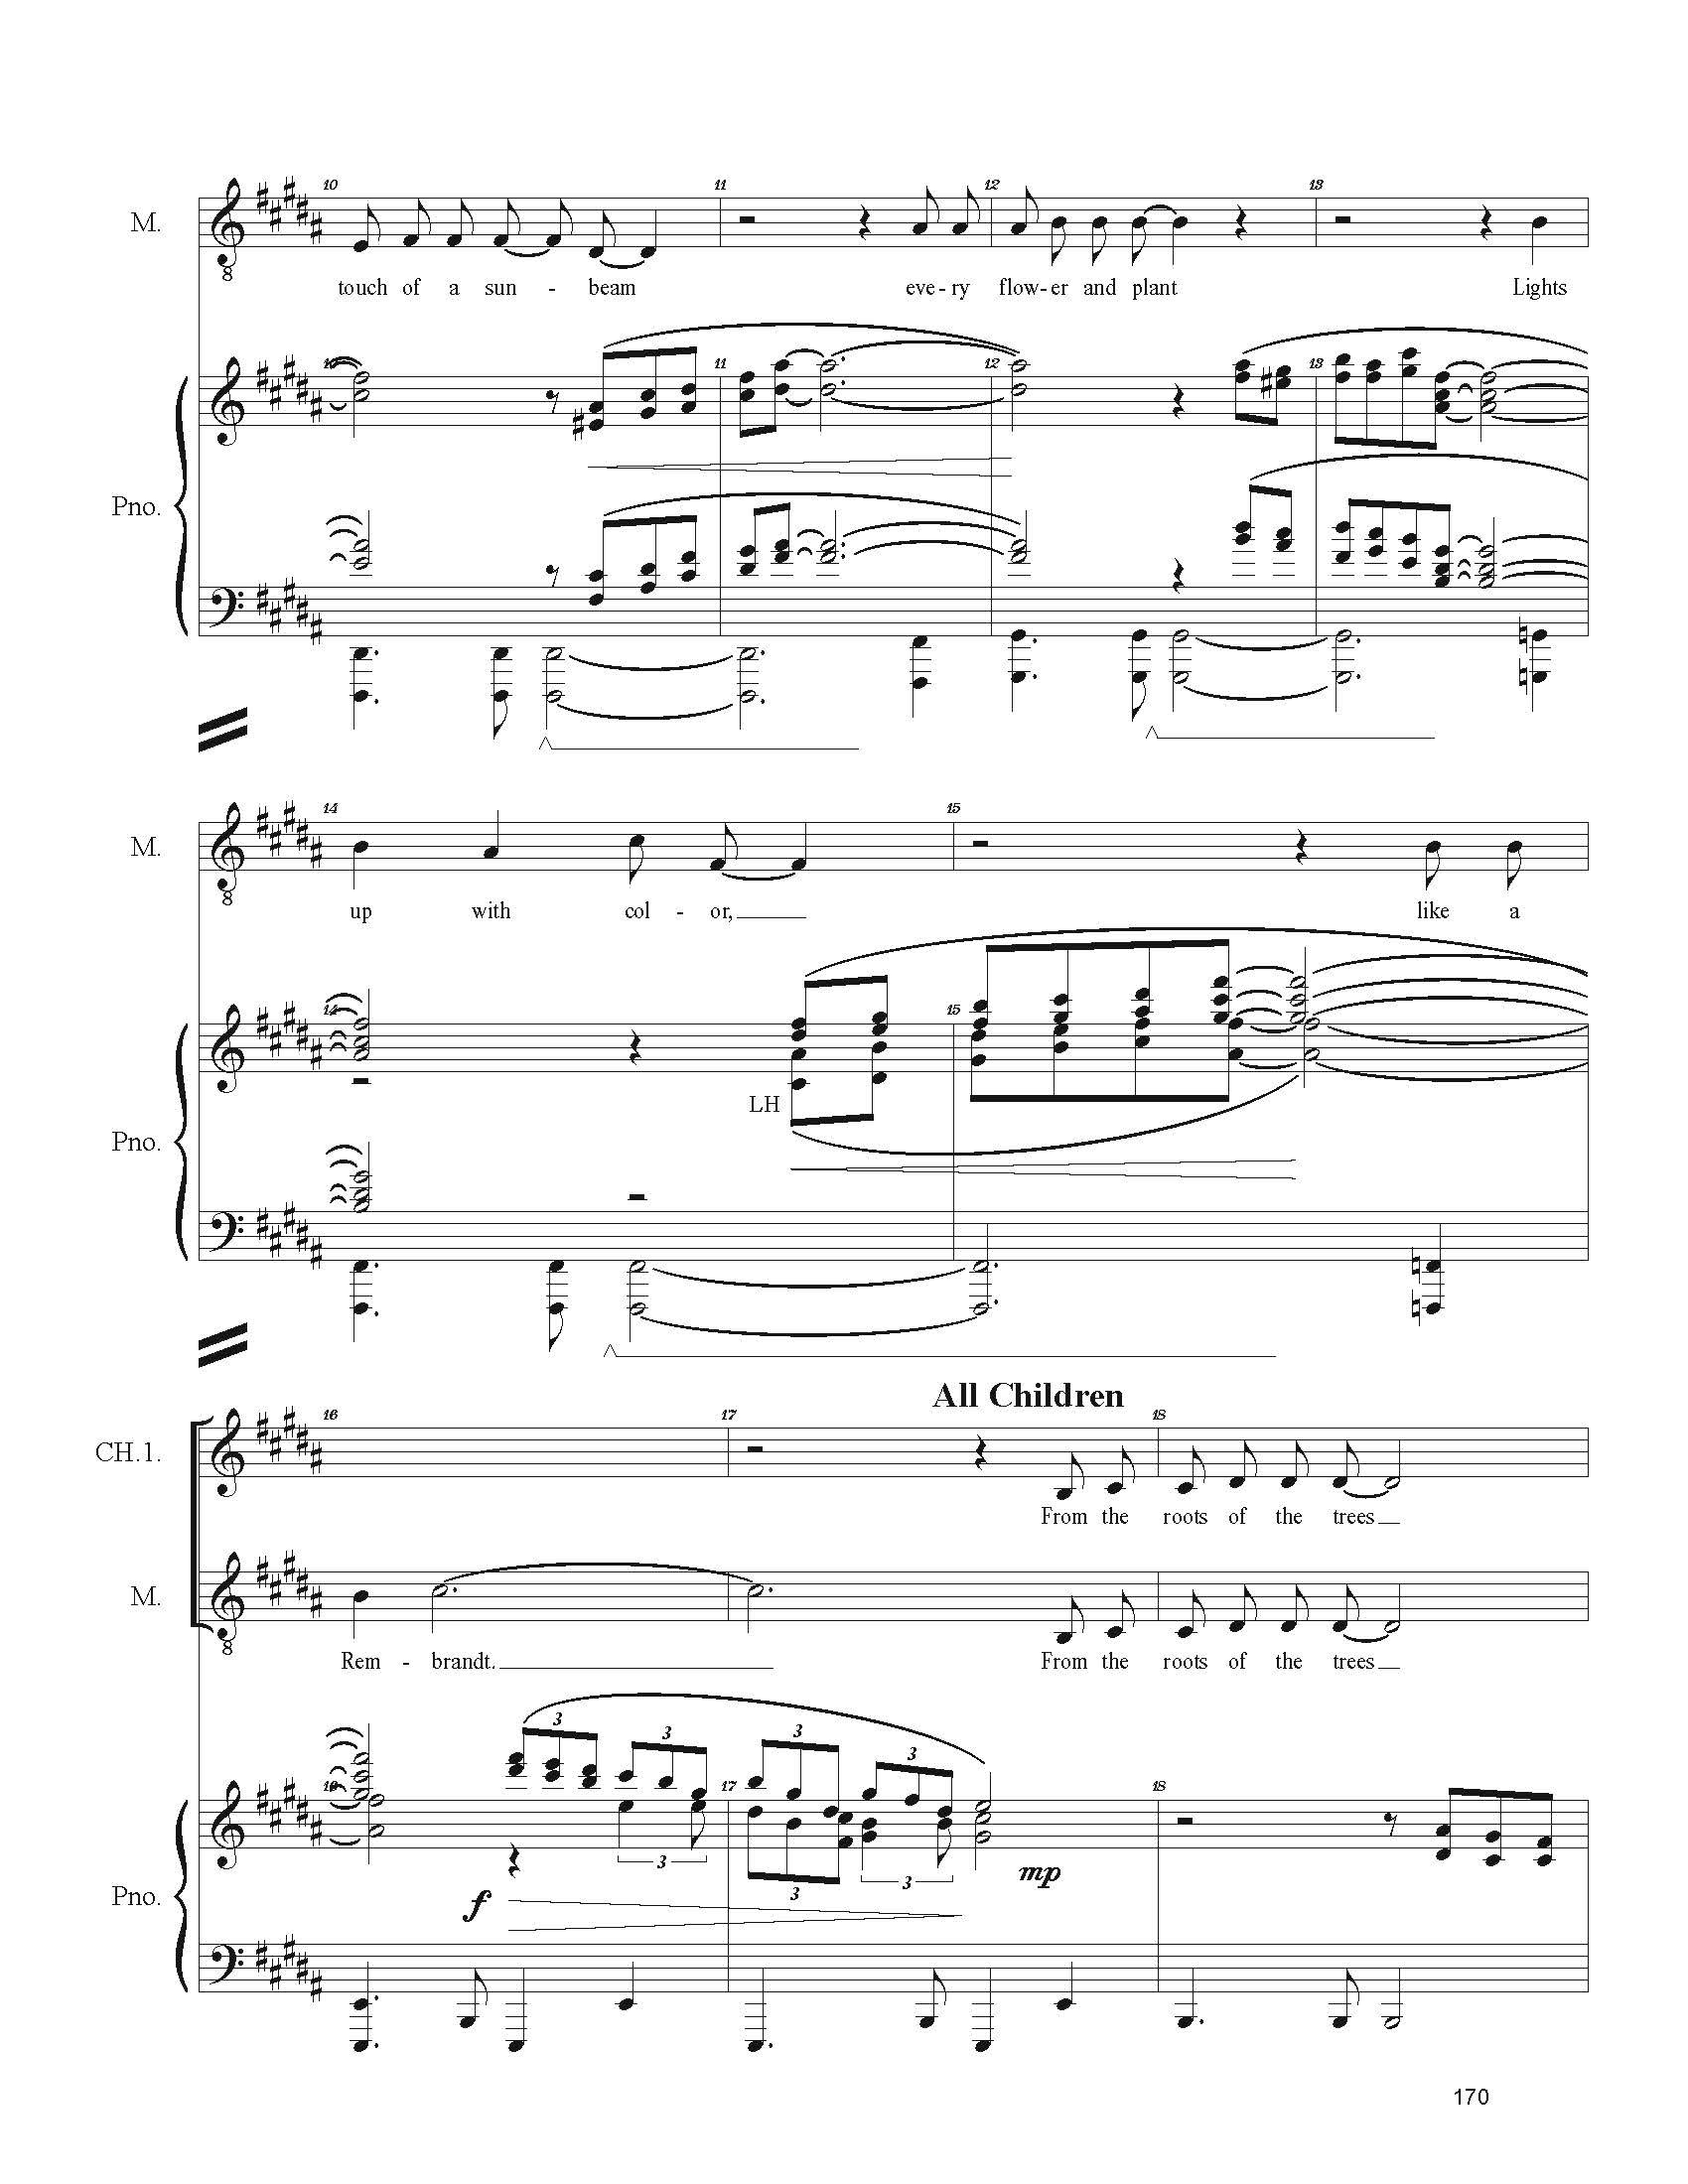 FULL PIANO VOCAL SCORE DRAFT 1 - Score_Page_170.jpg